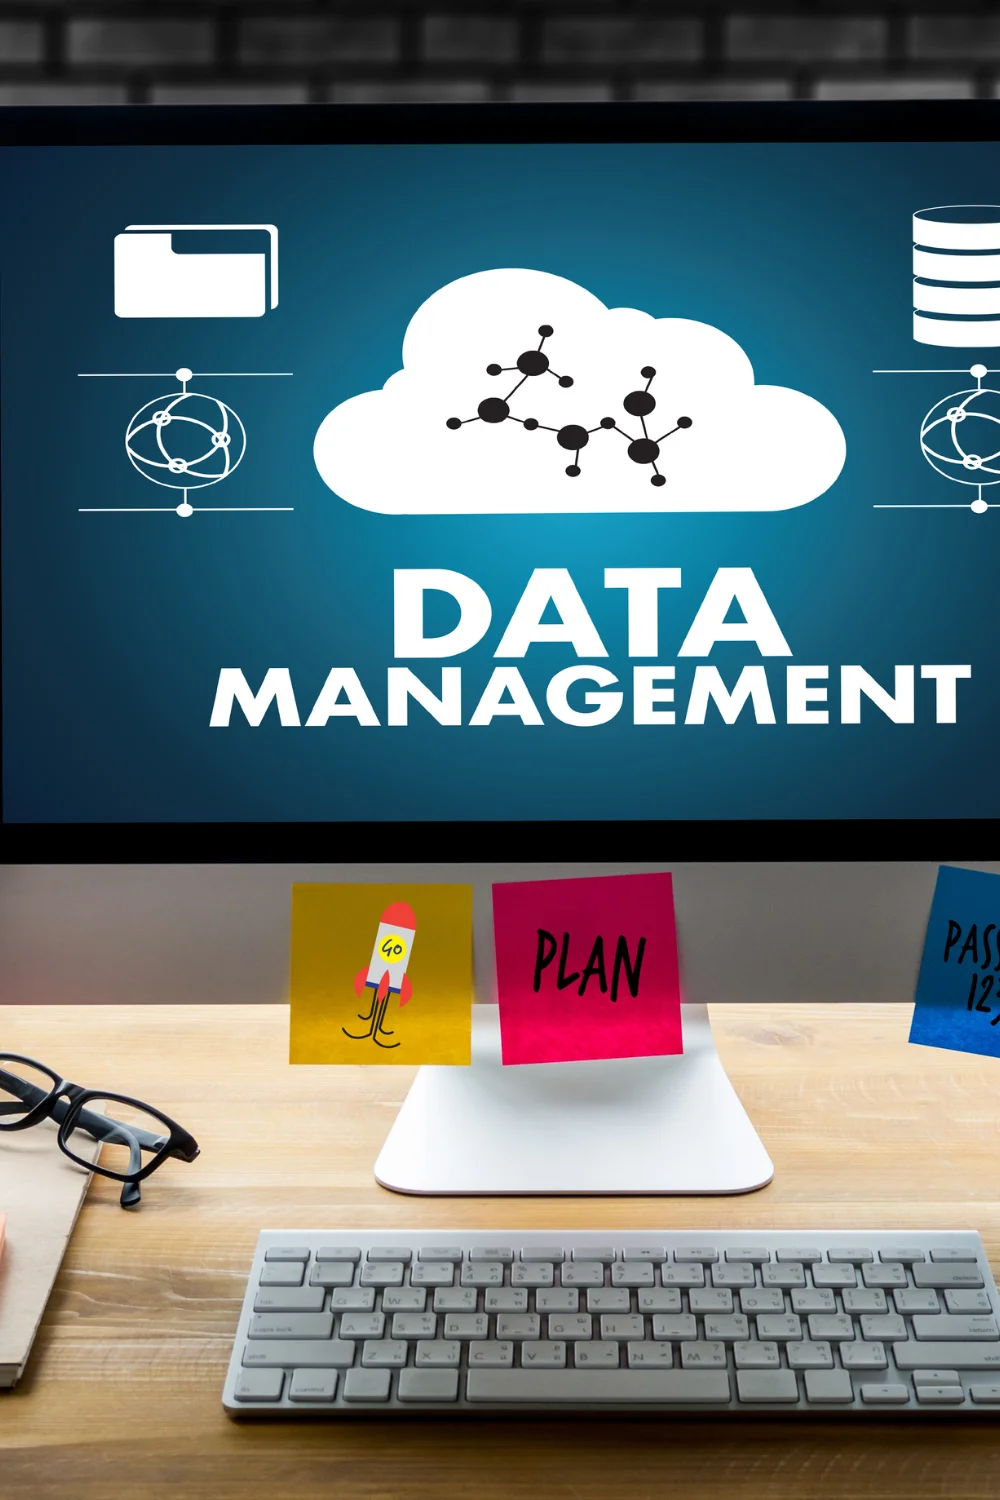 Enterprise Data management